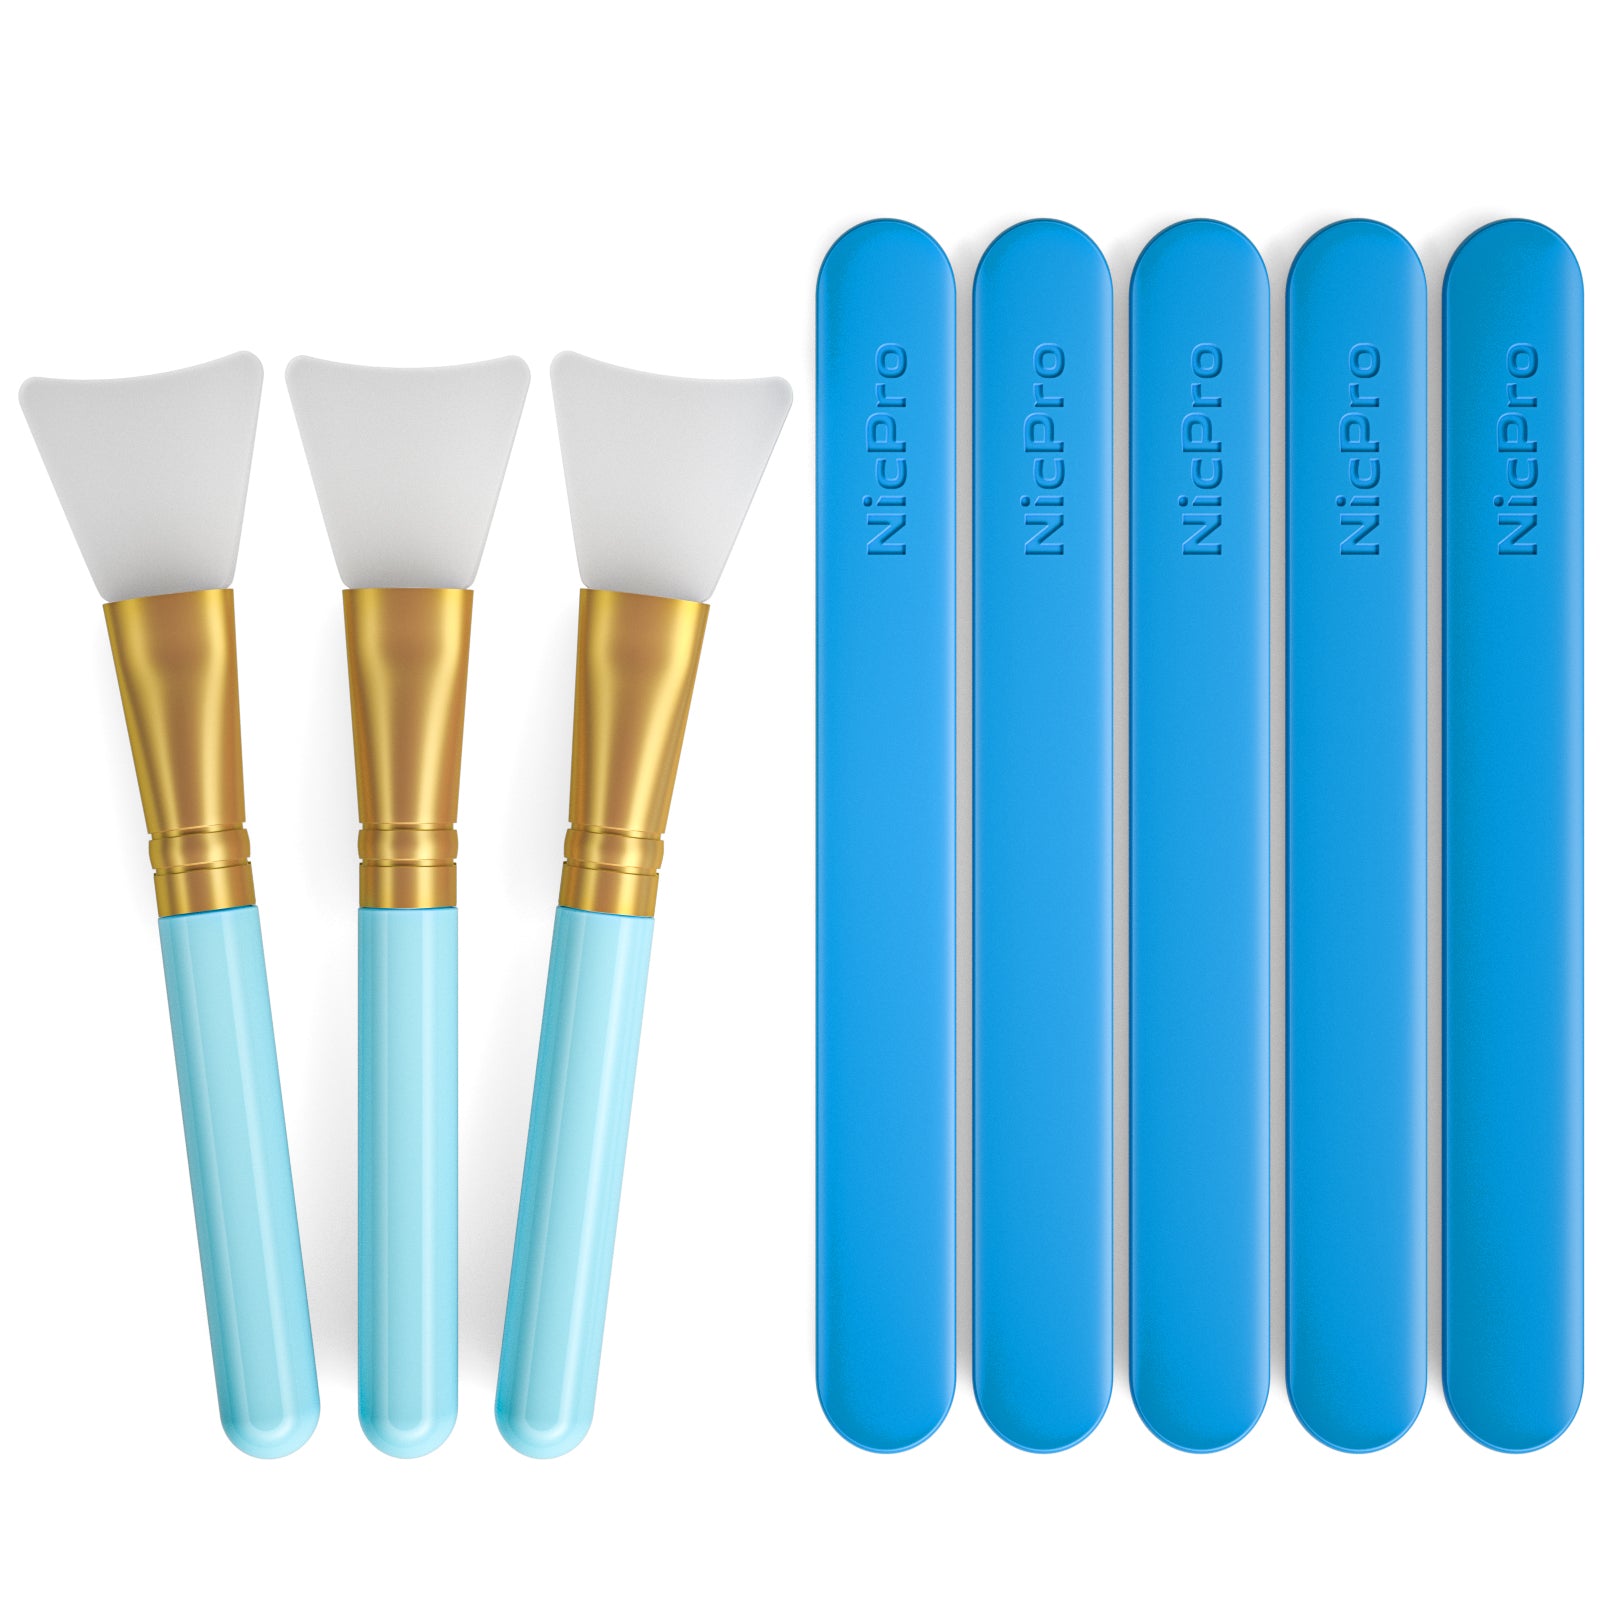 Nicpro 5PCS Silicone Stir Sticks, Reusable Silicone Popsicle Sticks with 3PCS Silicone Brushes for Mixing Resin, Epoxy, Liquid, Paint, Making Glitter Tumblers